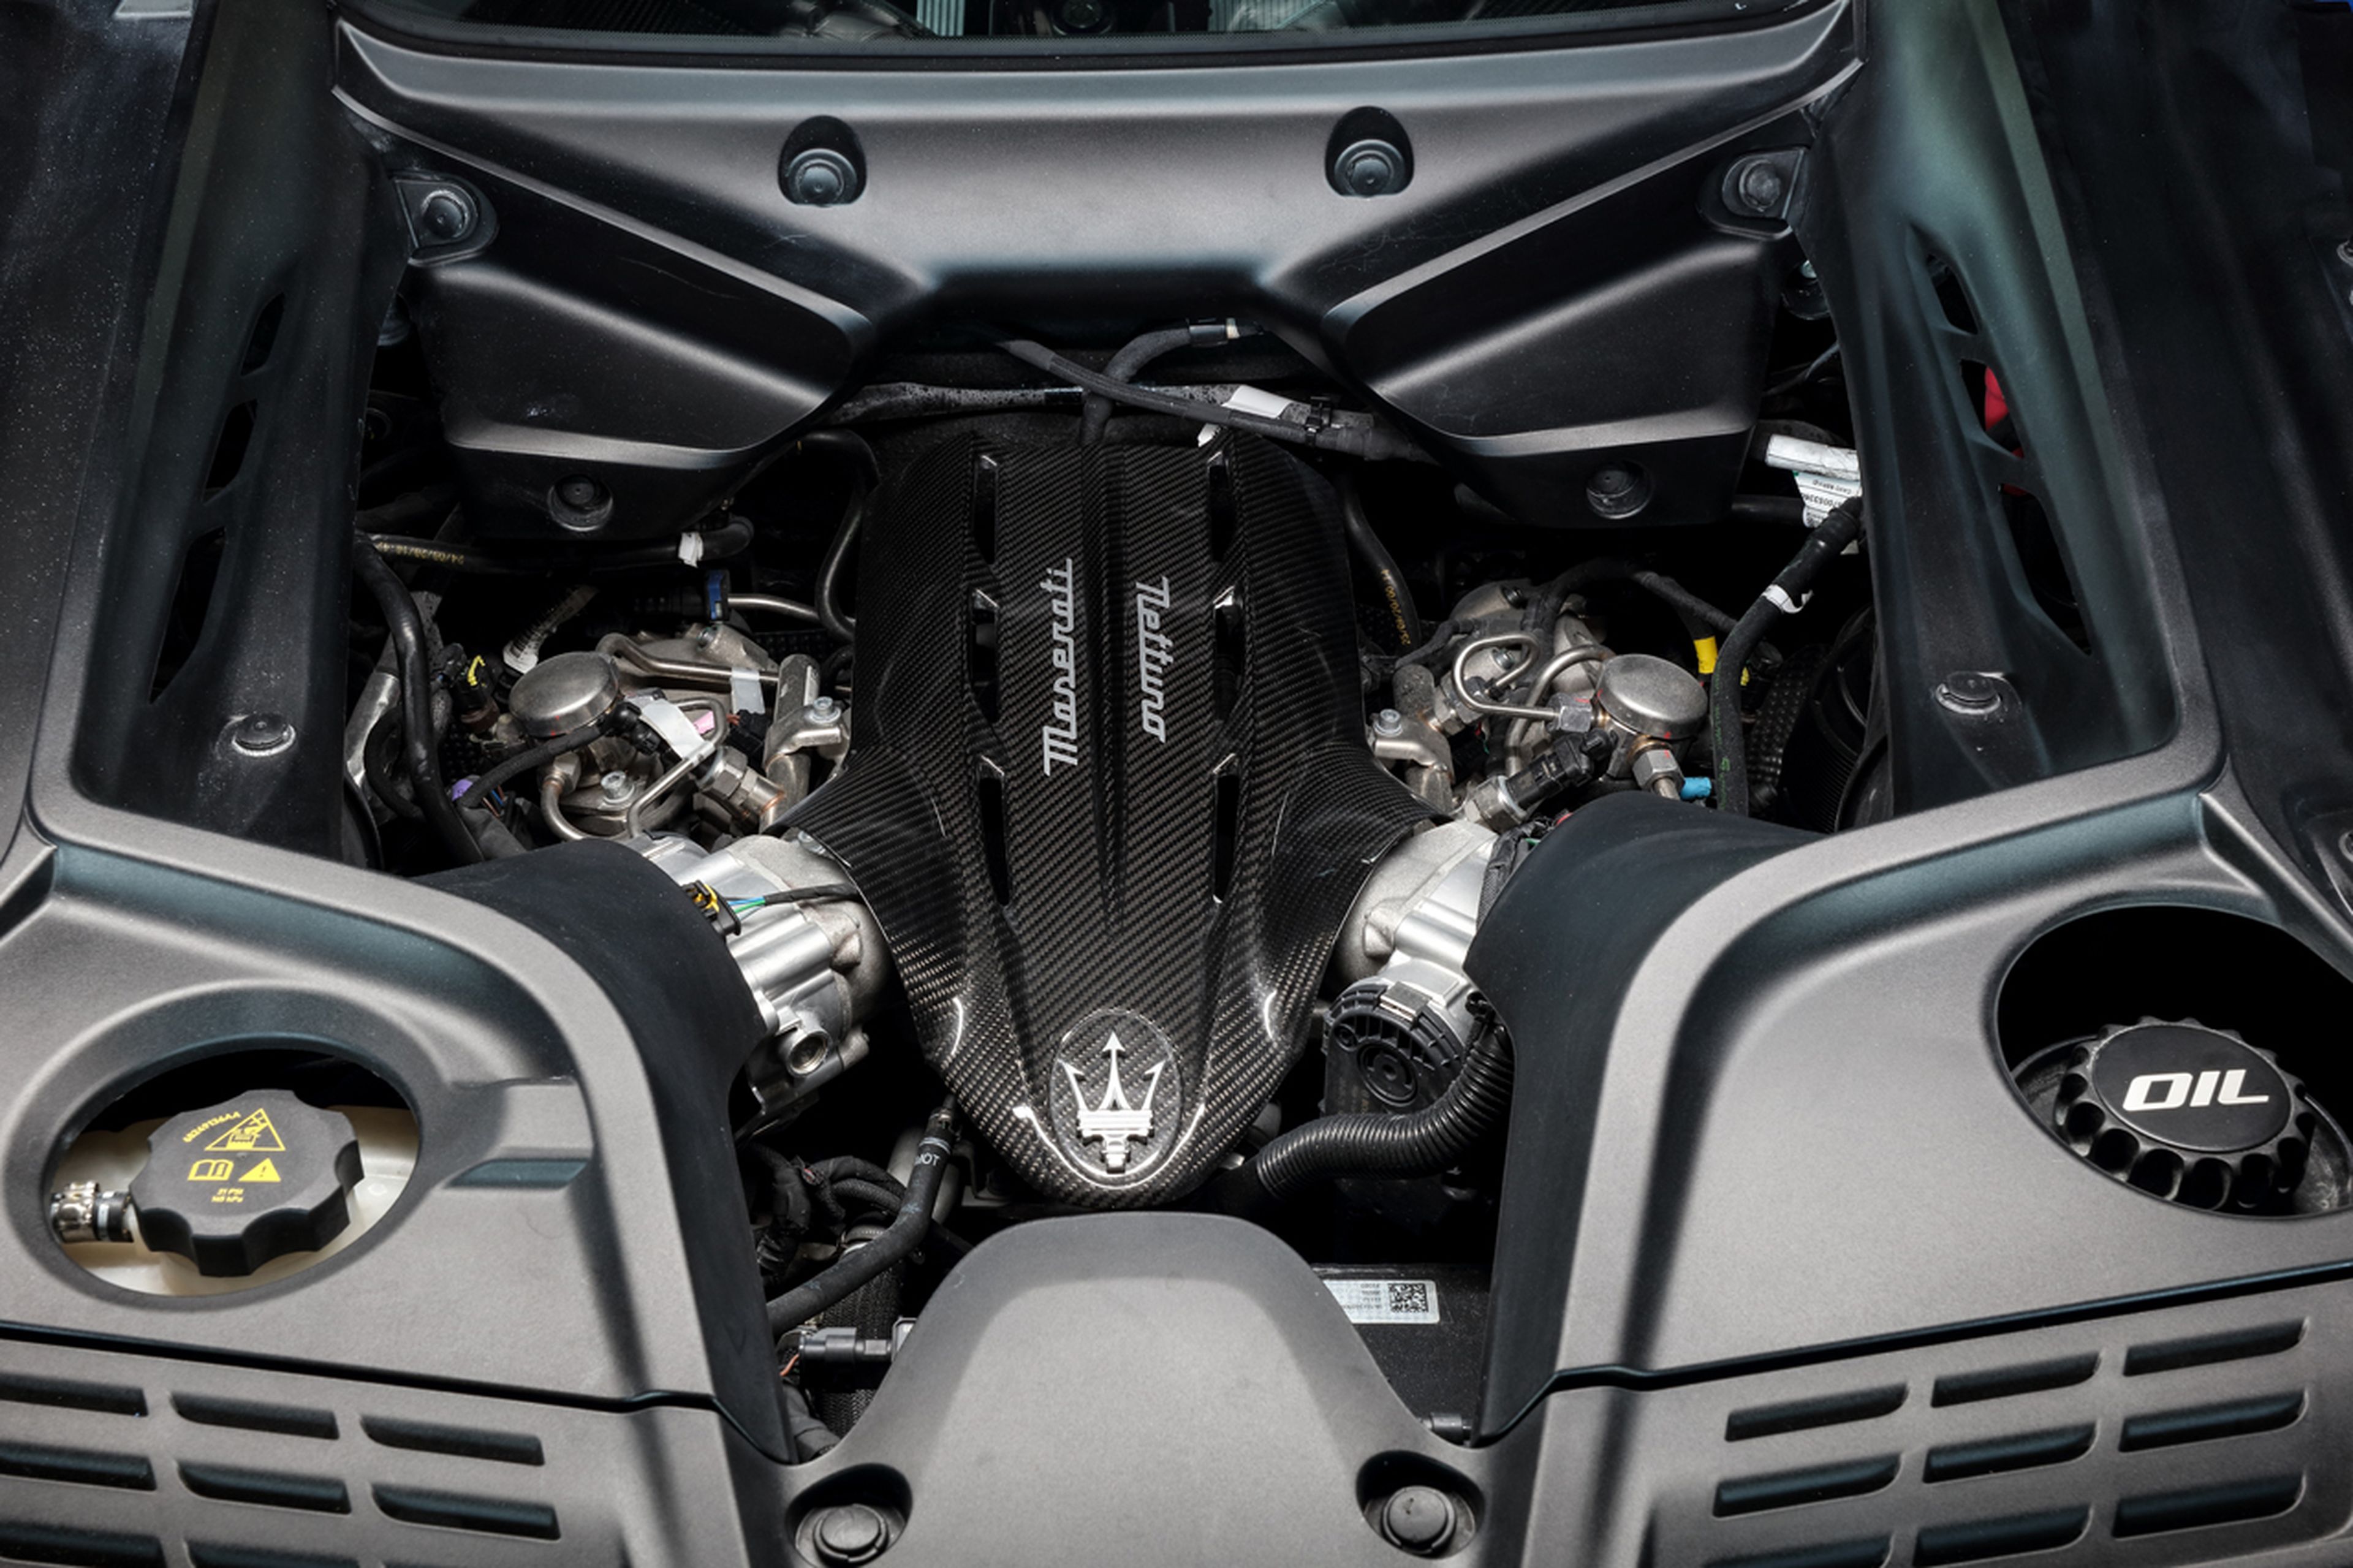 Motor Nettuno V6 biturbo montado en el Maserati MC20.